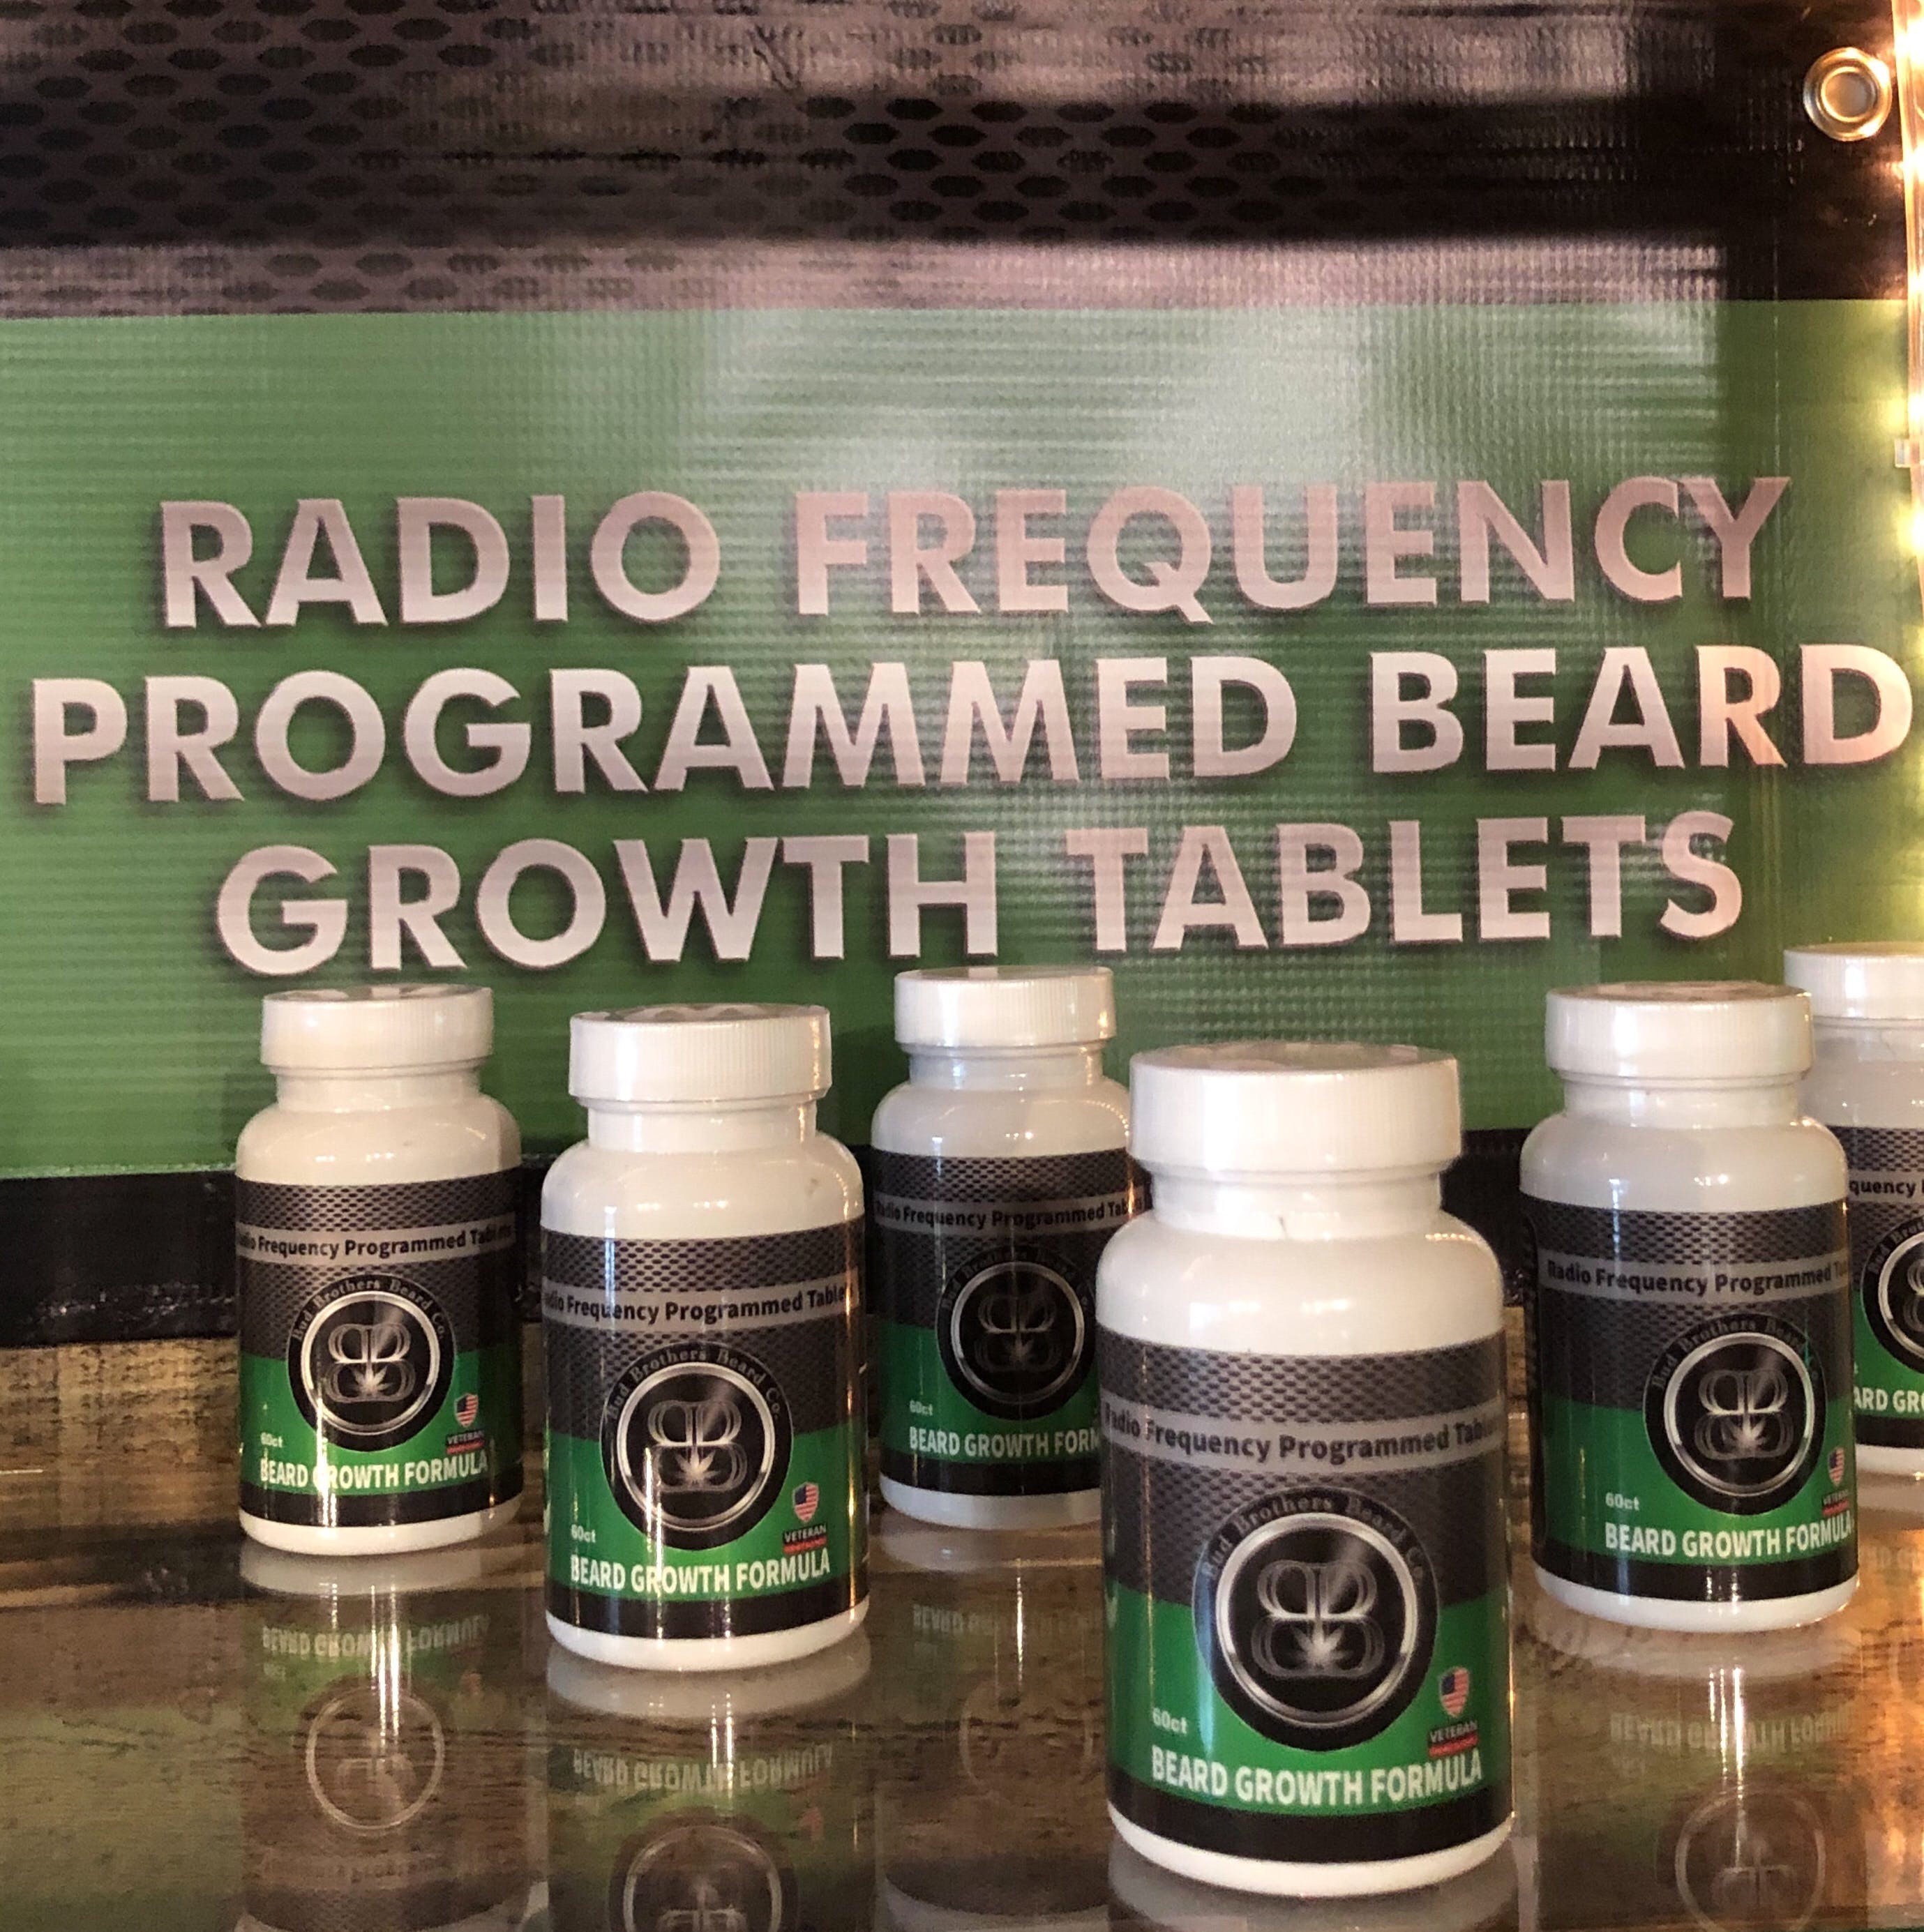 edible-rfpt-bud-brothers-beard-growth-tablets